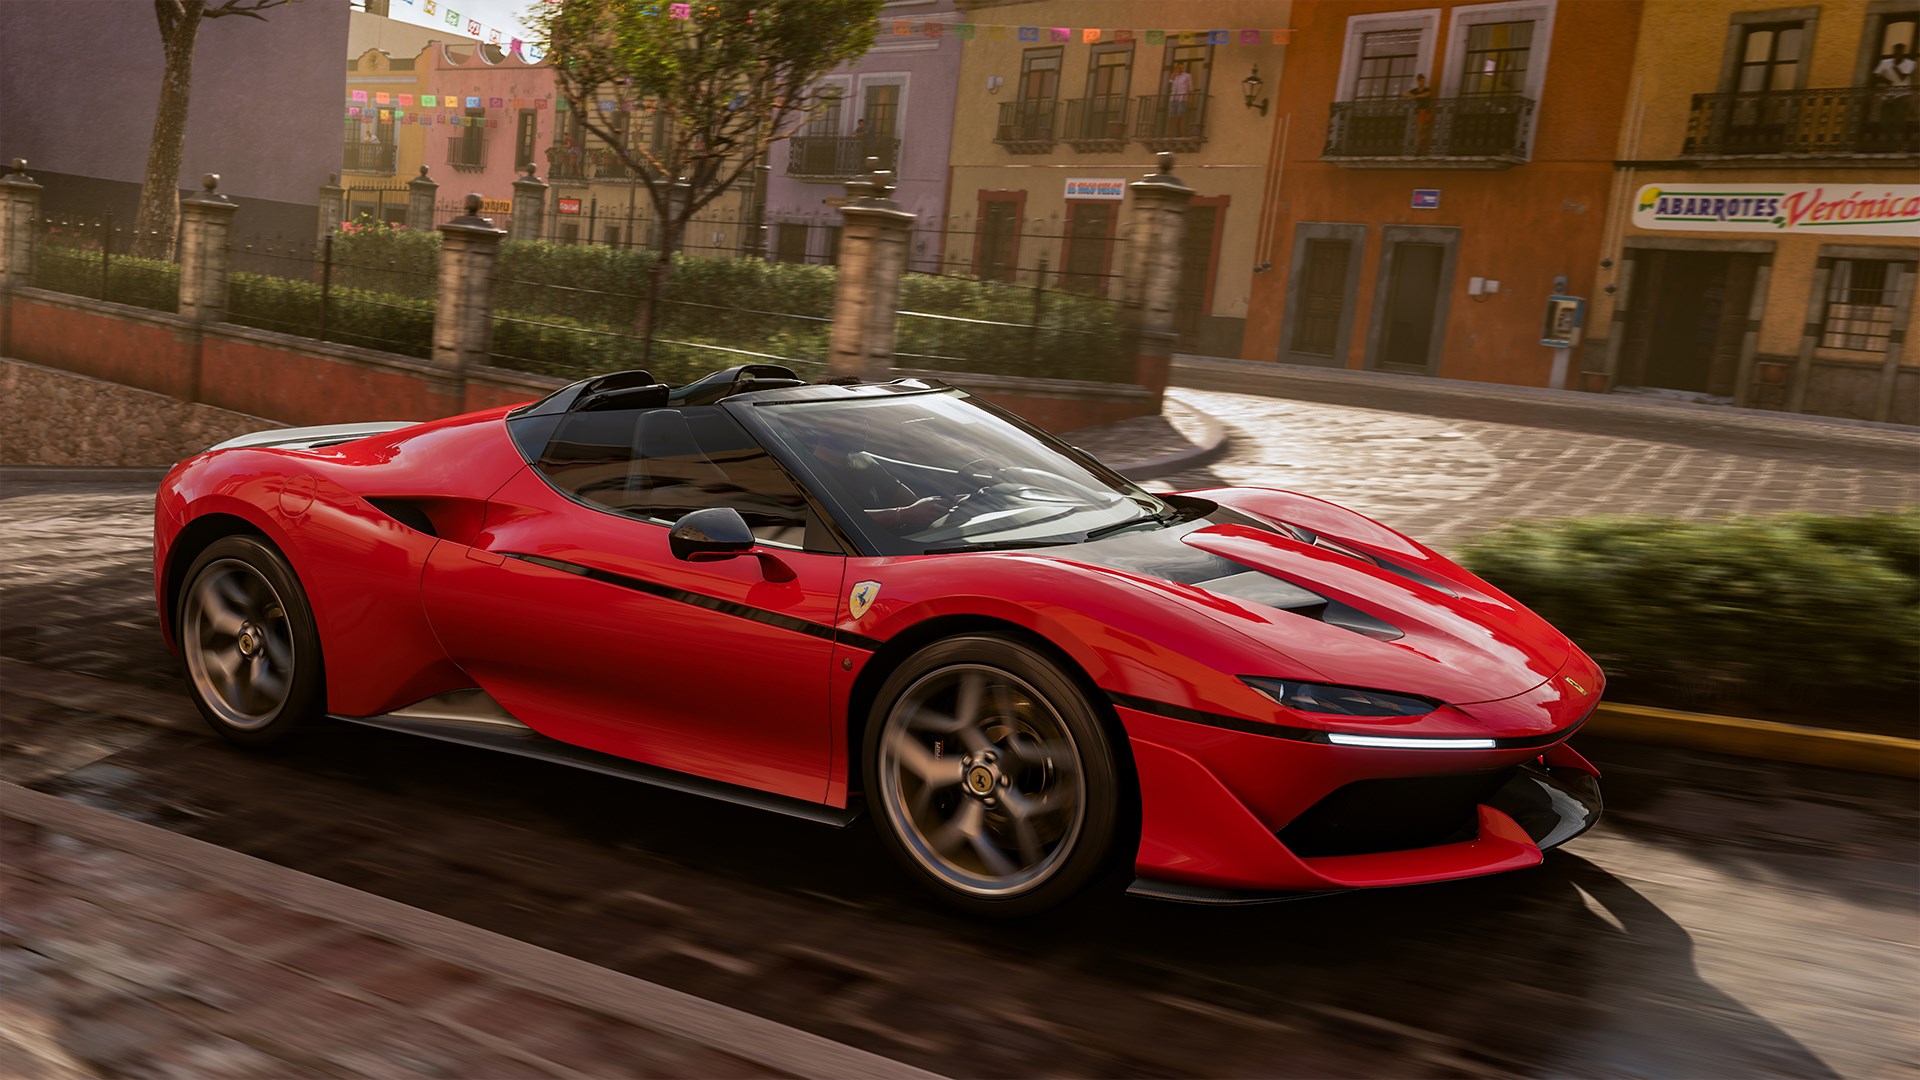 Buy Forza Horizon 3 - Microsoft Store en-AI